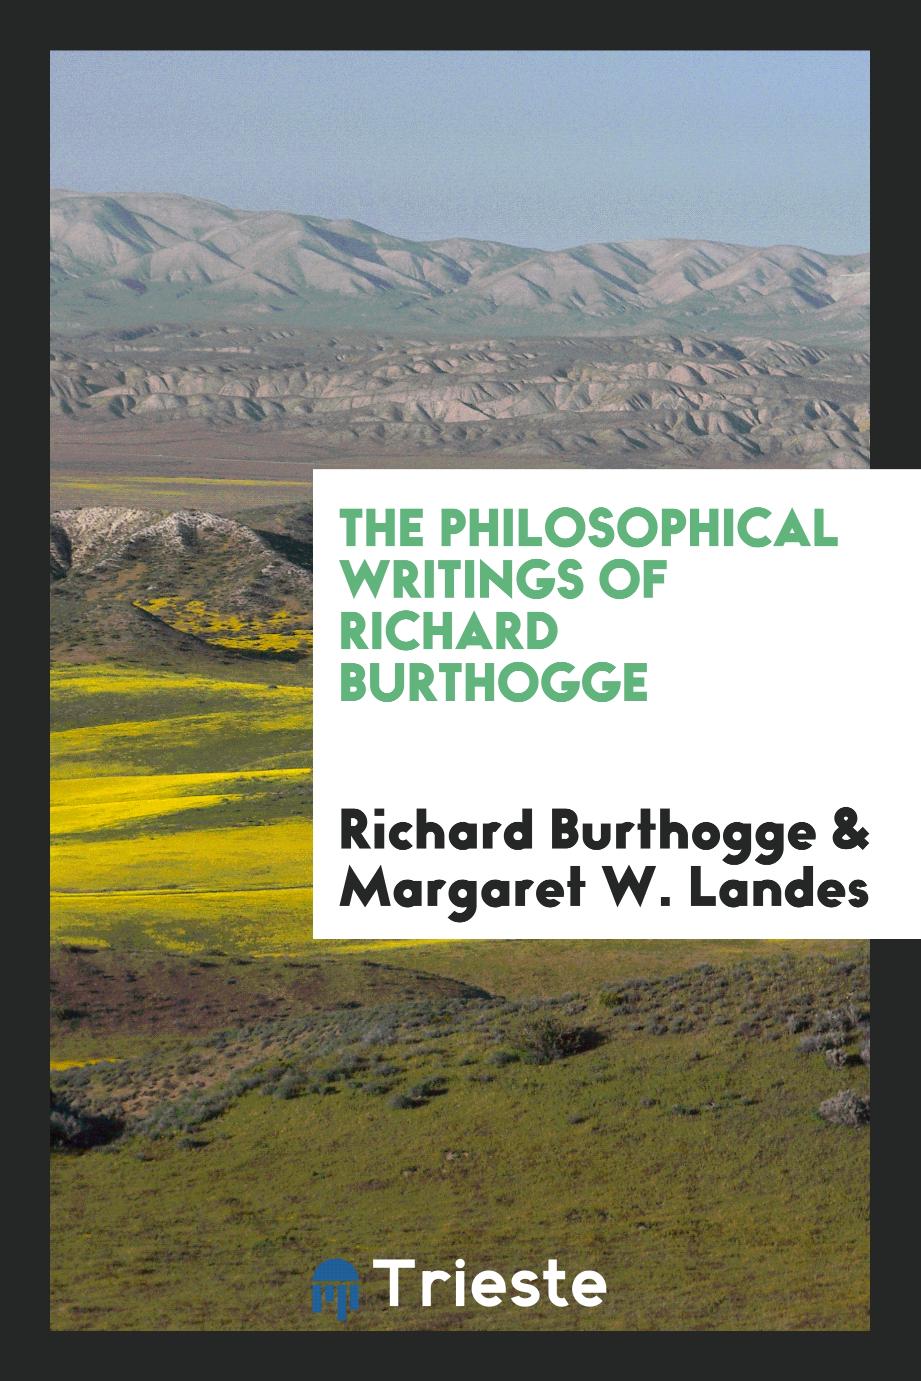 The philosophical writings of Richard Burthogge